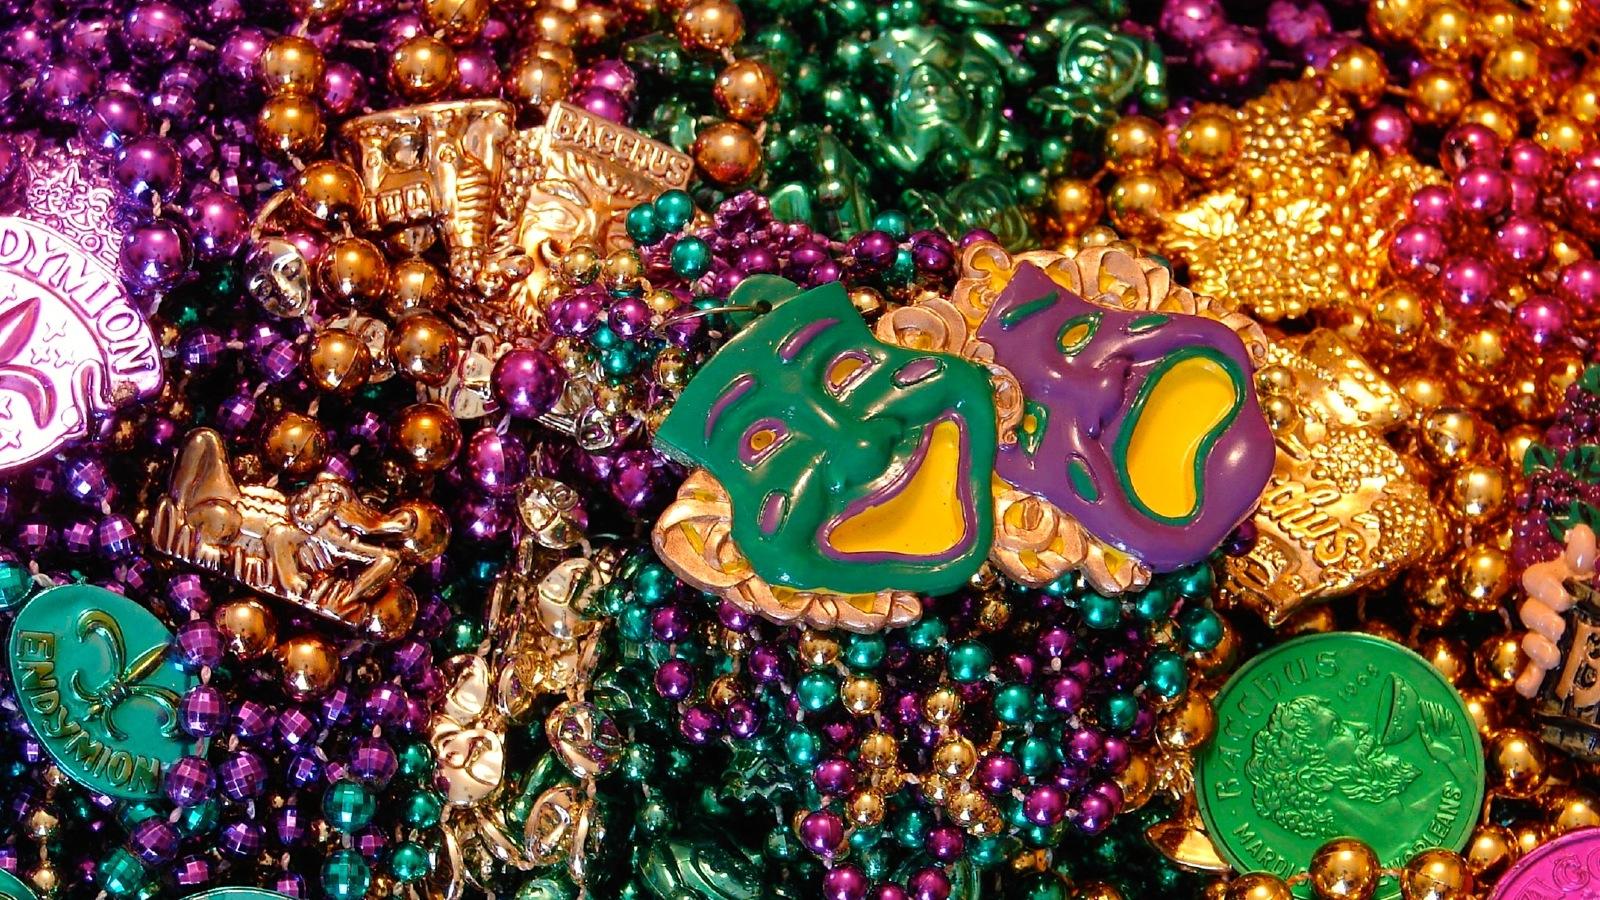 Mardi Gras New Orleans 2019 in New Orleans, LA